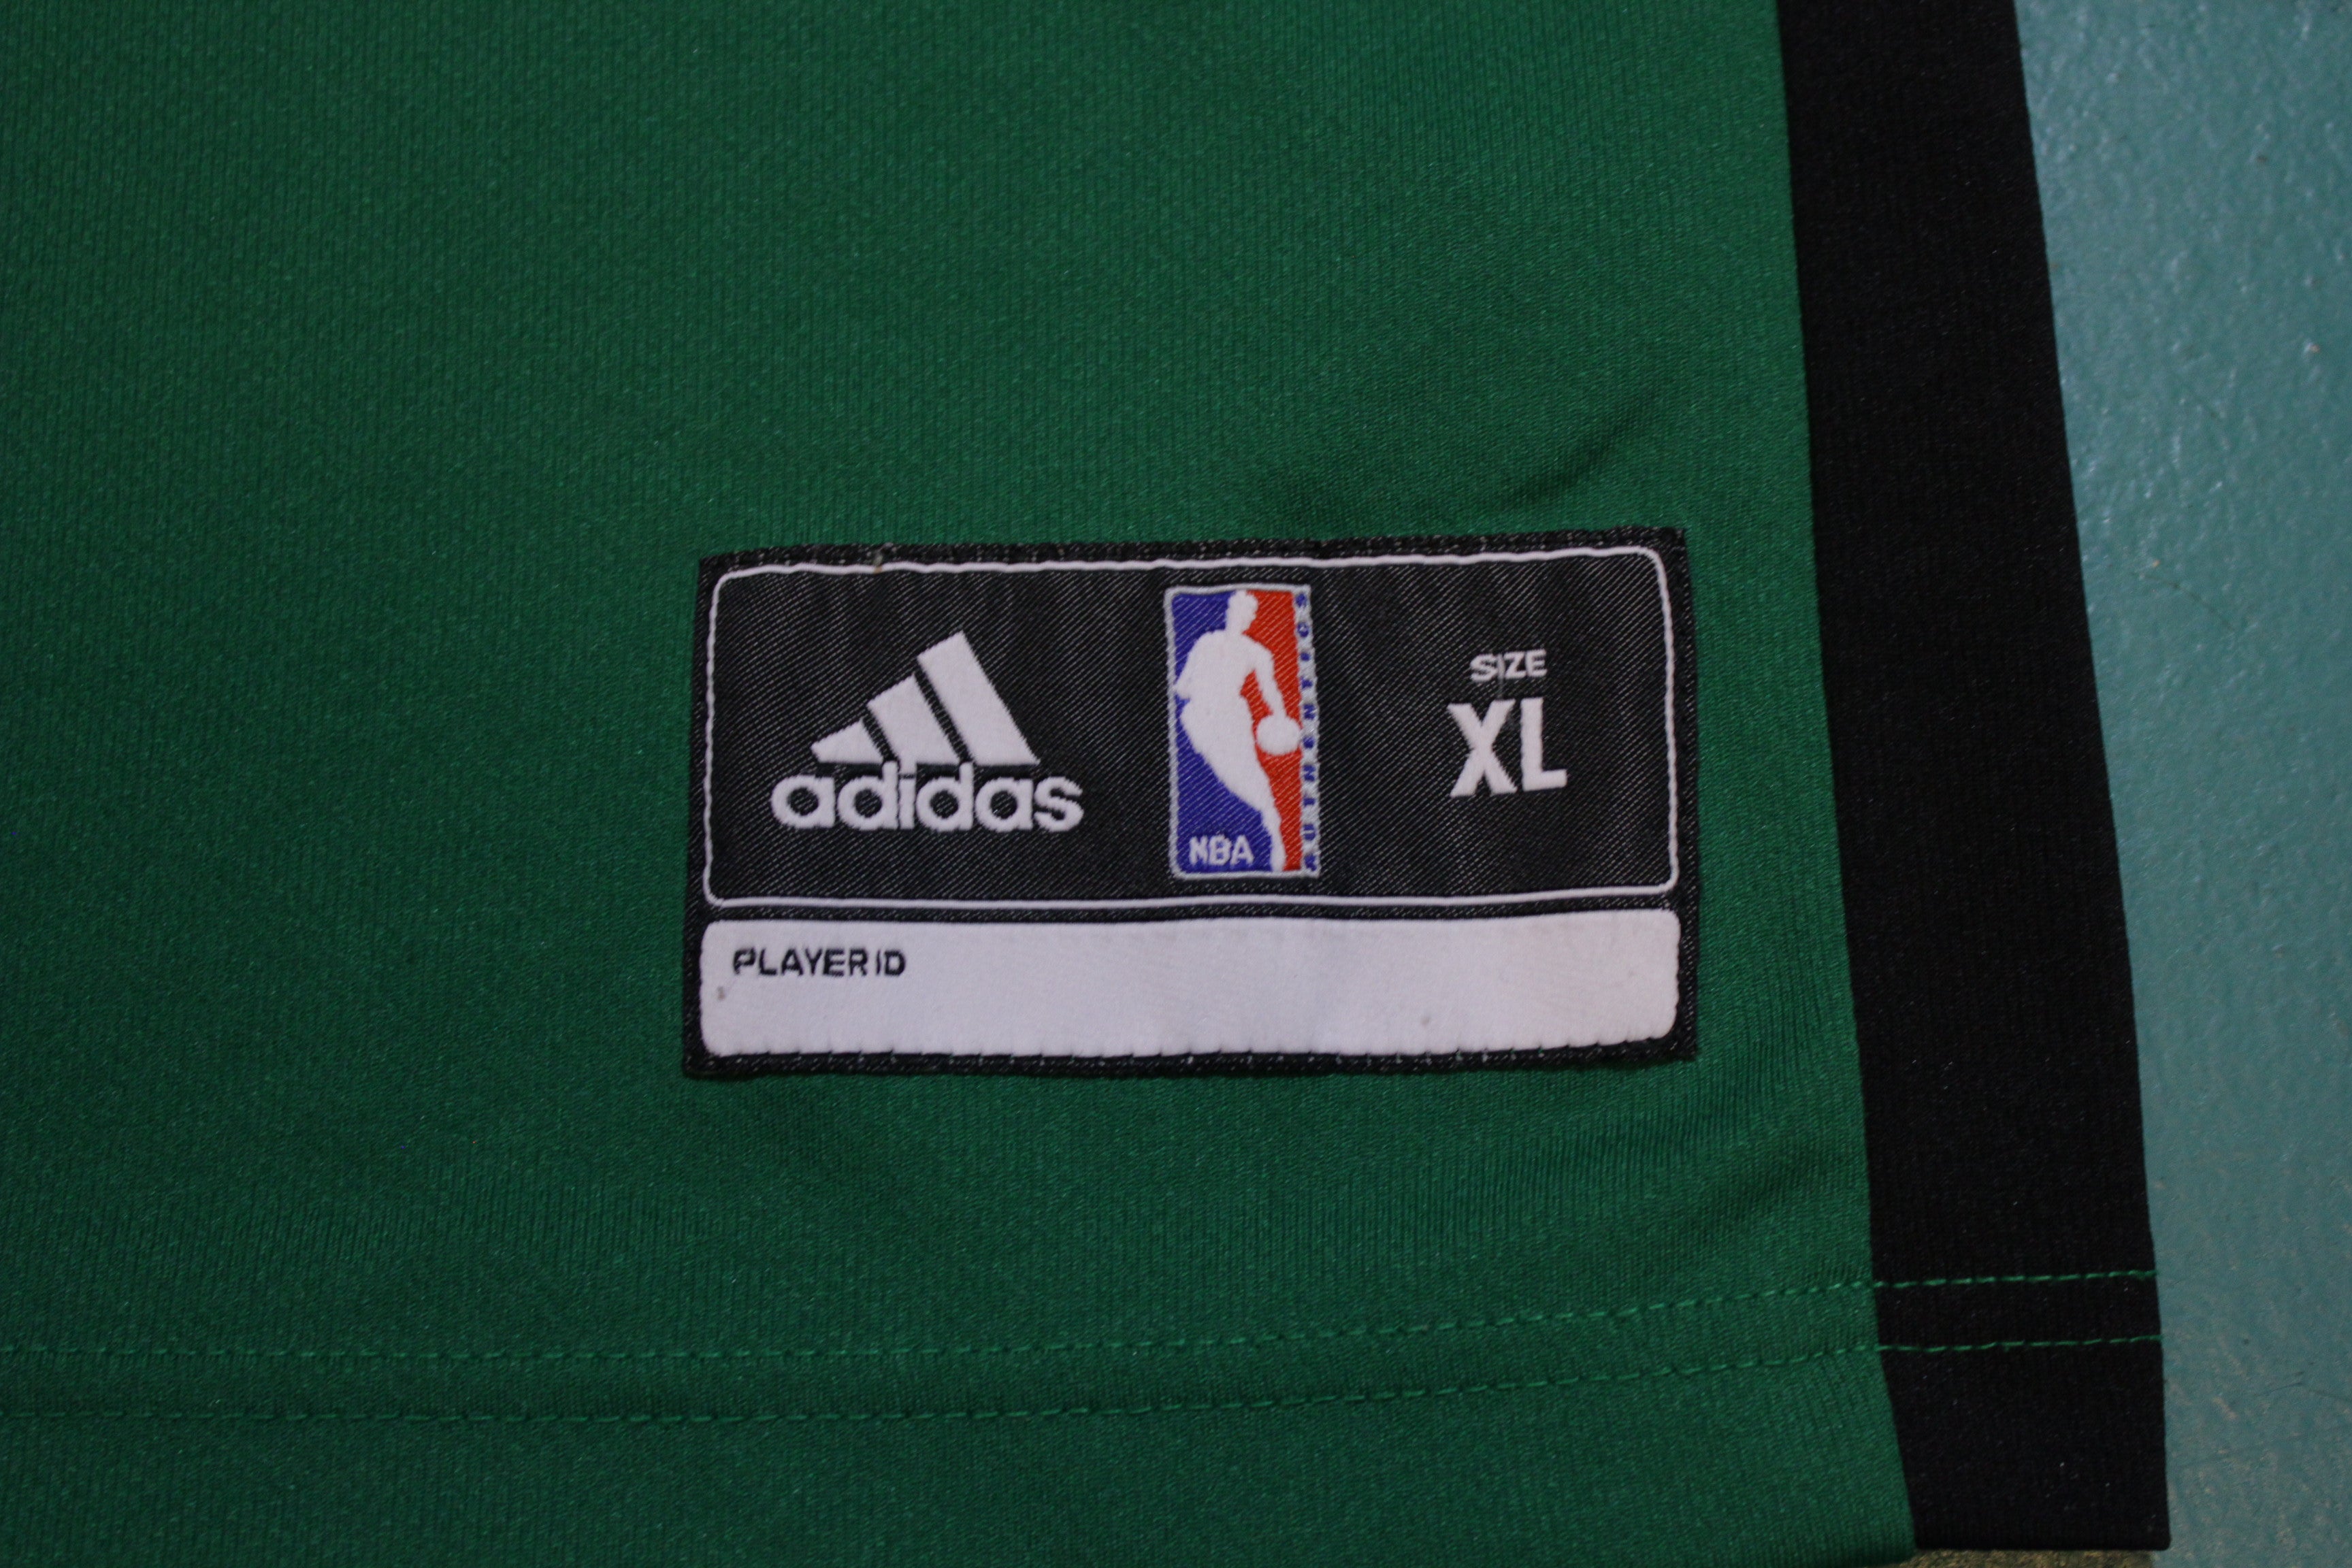 Paul Pierce Adidas Green Boston Celtics Jersey #34 – thefuzzyfelt